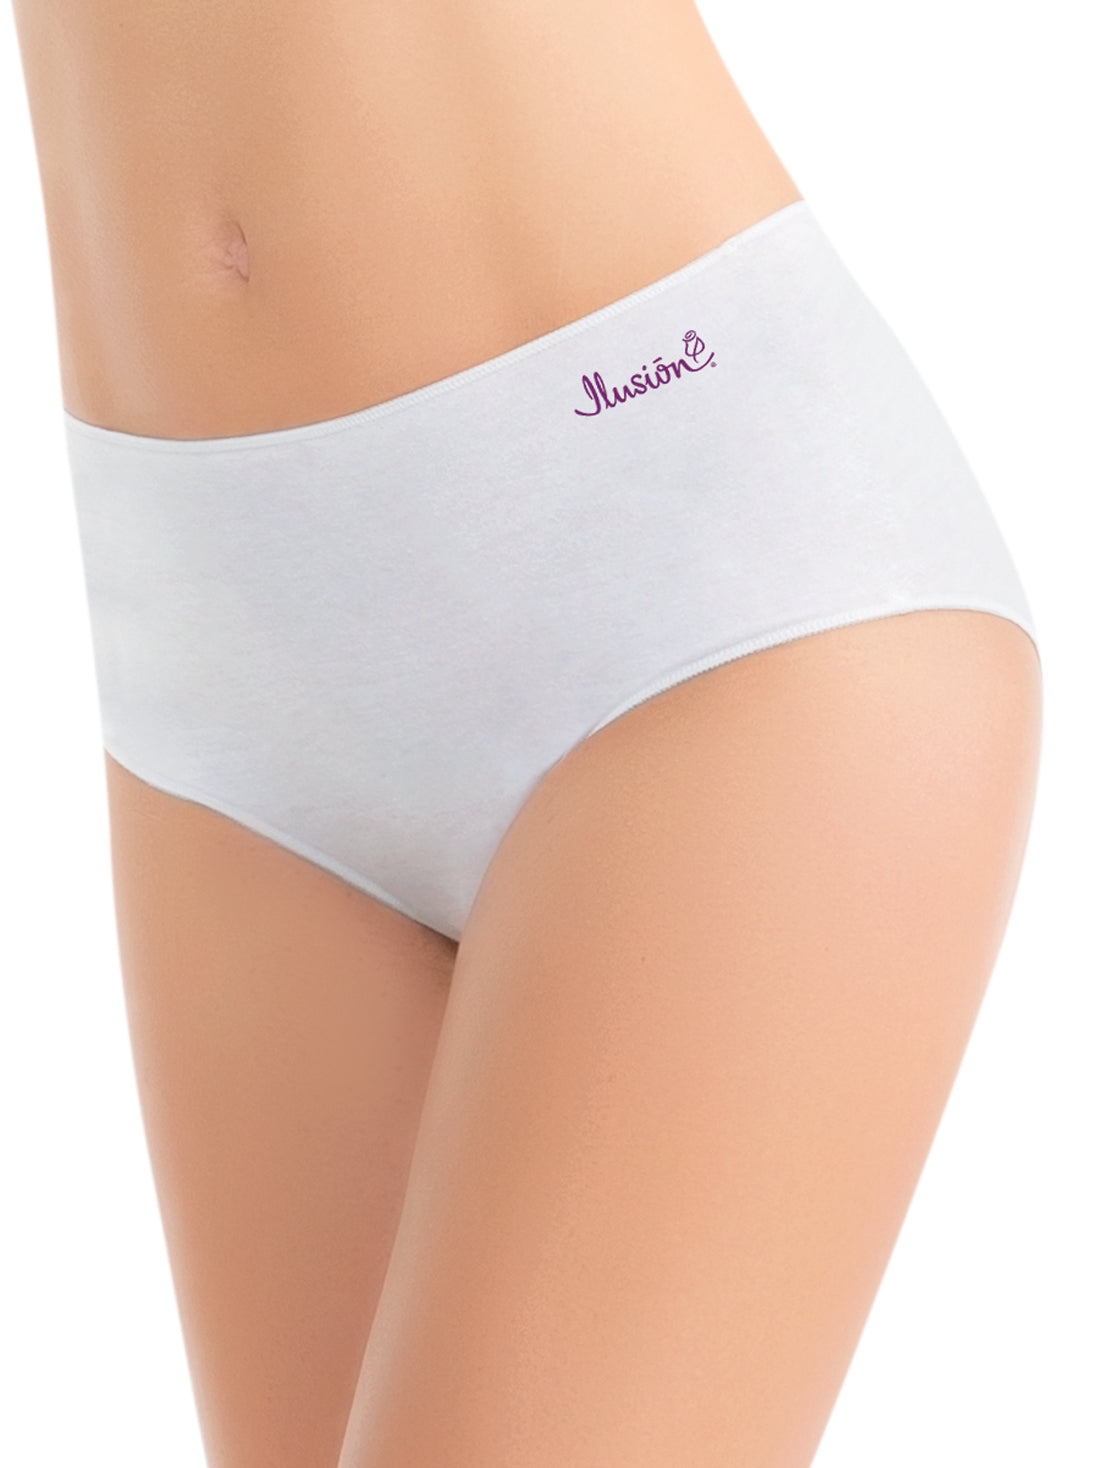 Women's Underwear Mature F Wording, Size M AU12, F Ray of Sunshine 